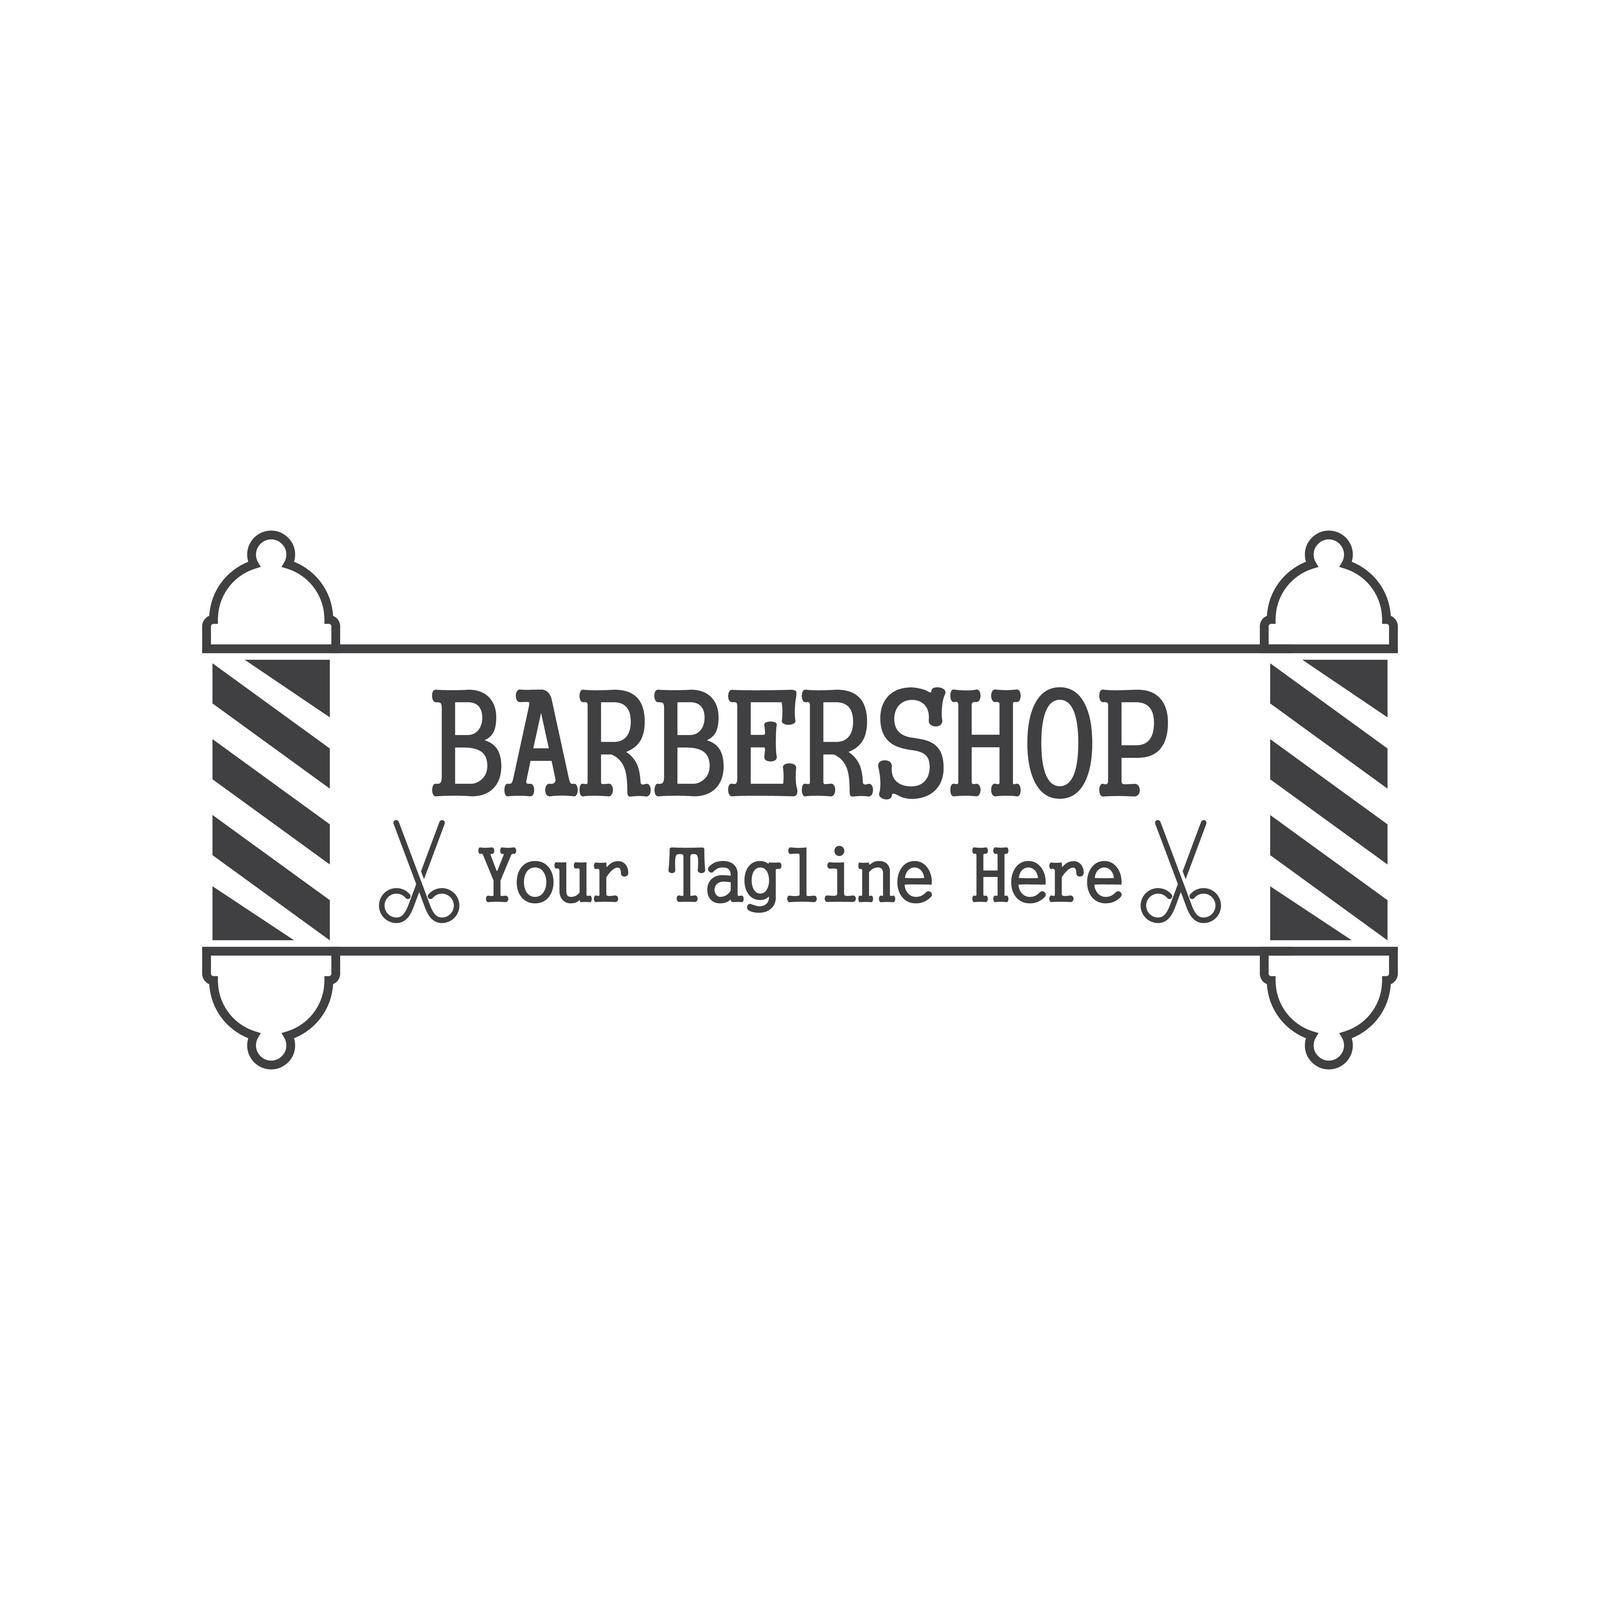 Barber pole logo by awk